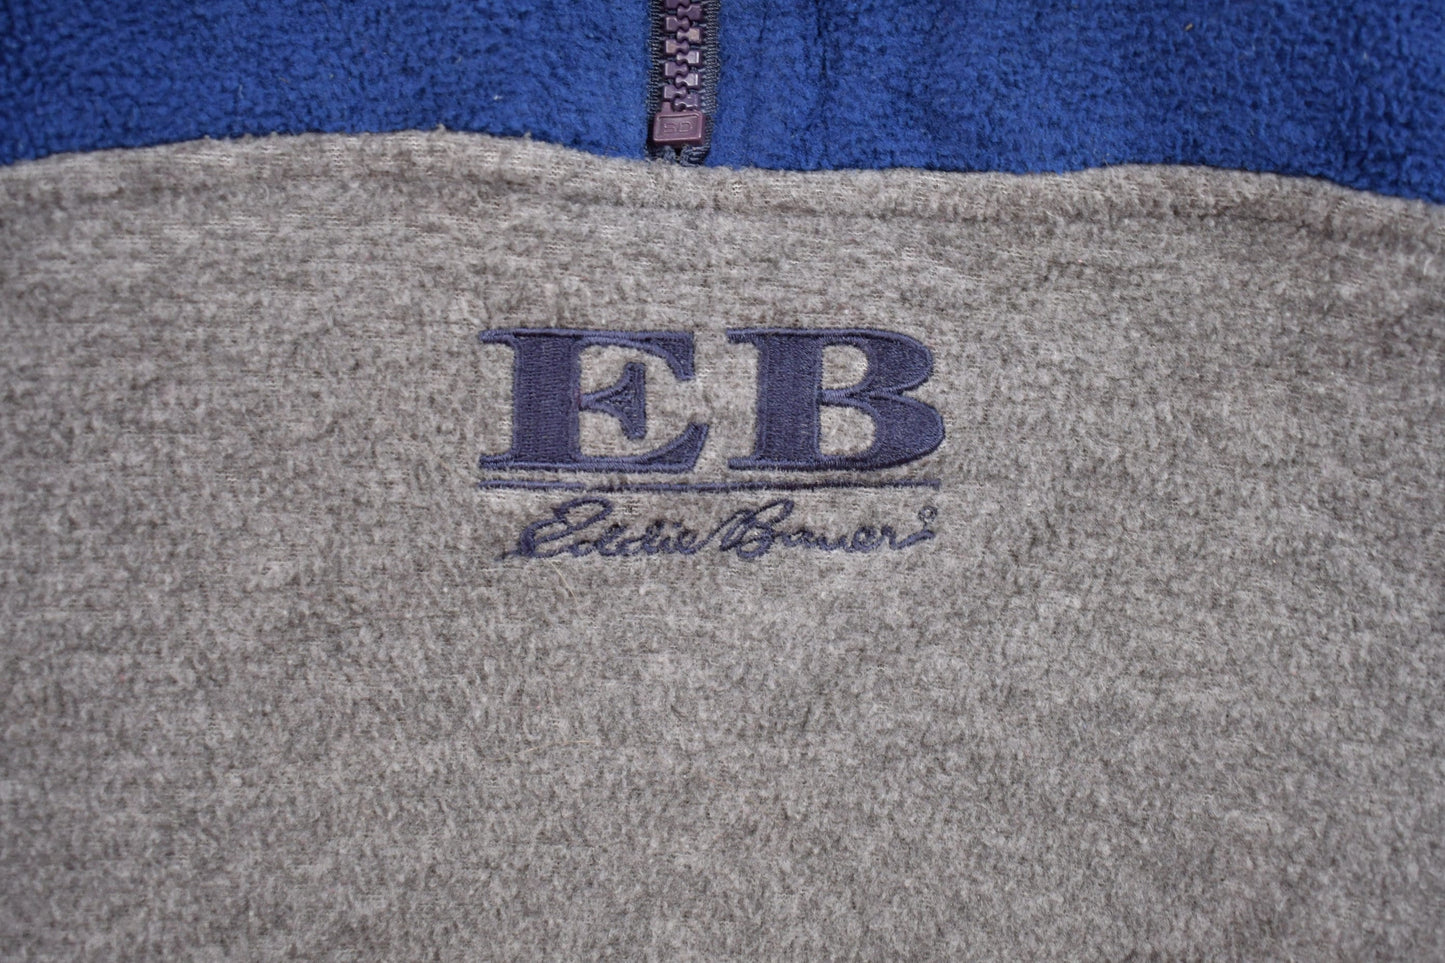 Vintage 1990s Eddie Bauer Hooded Fleece Sweater / Outdoorsman / 90s Sweater / Streetwear / Hiking / Fleece Zip up / Vintage Eddie Bauer